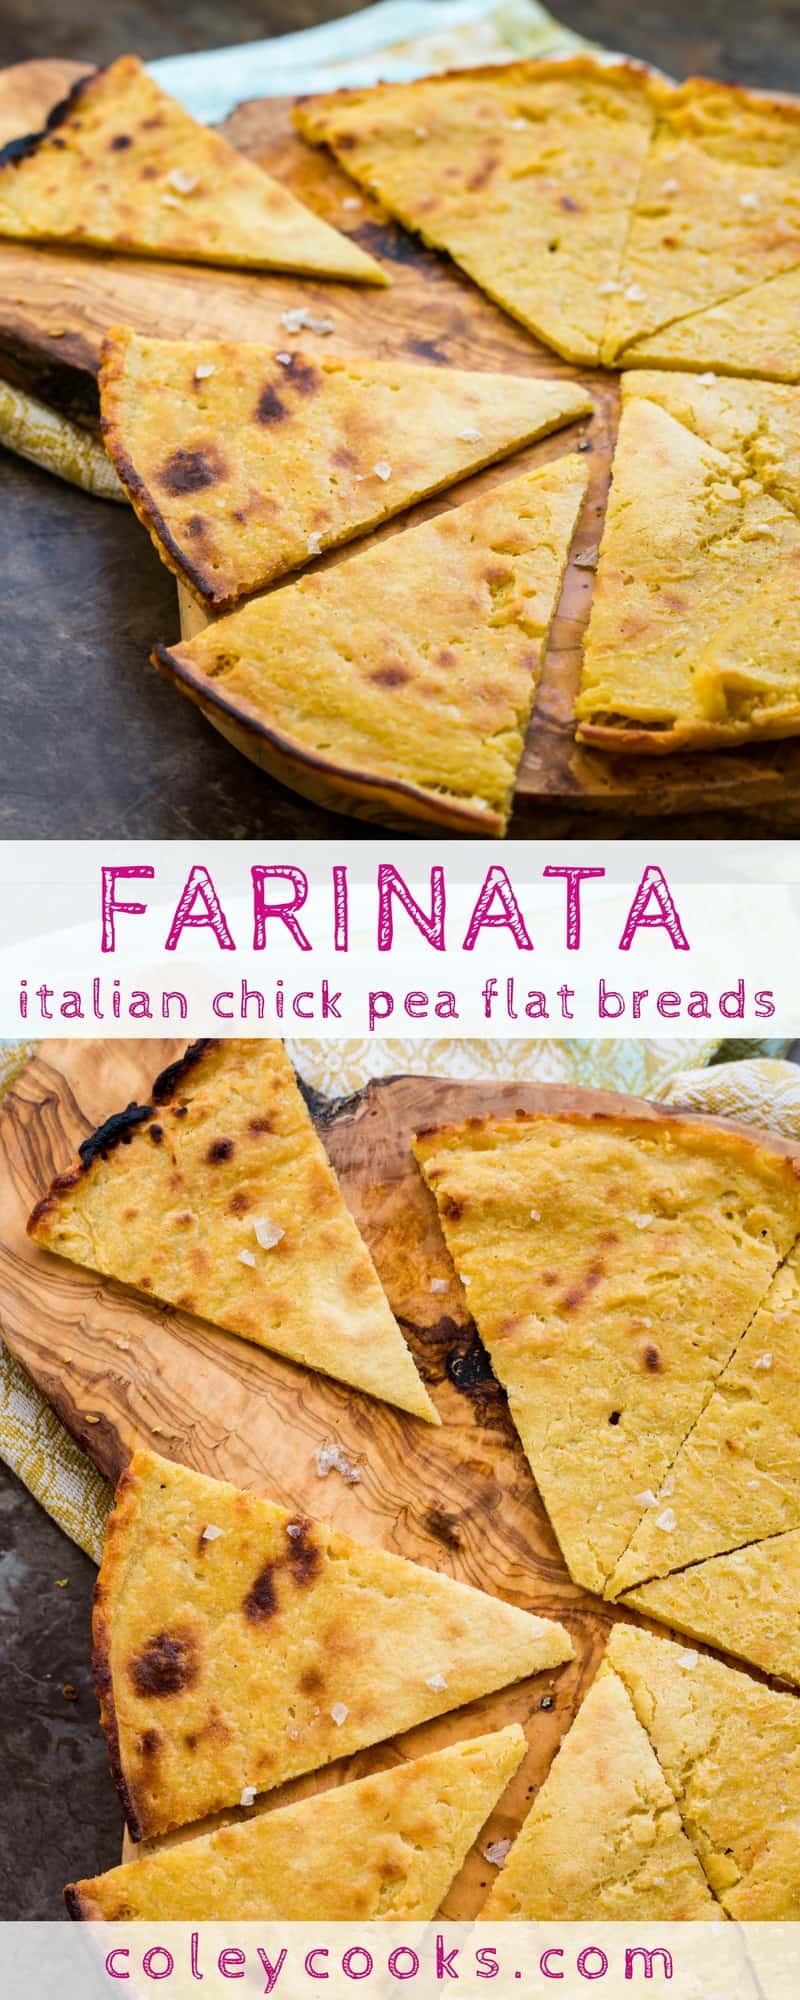 FARINATA / SOCCA | This easy recipe for Italian / French chick pea flatbread is vegan, gluten free, and super delicious! Crispy outside with creamy interior. Makes a great pizza base! #glutenfree #vegan | ColeyCooks.com